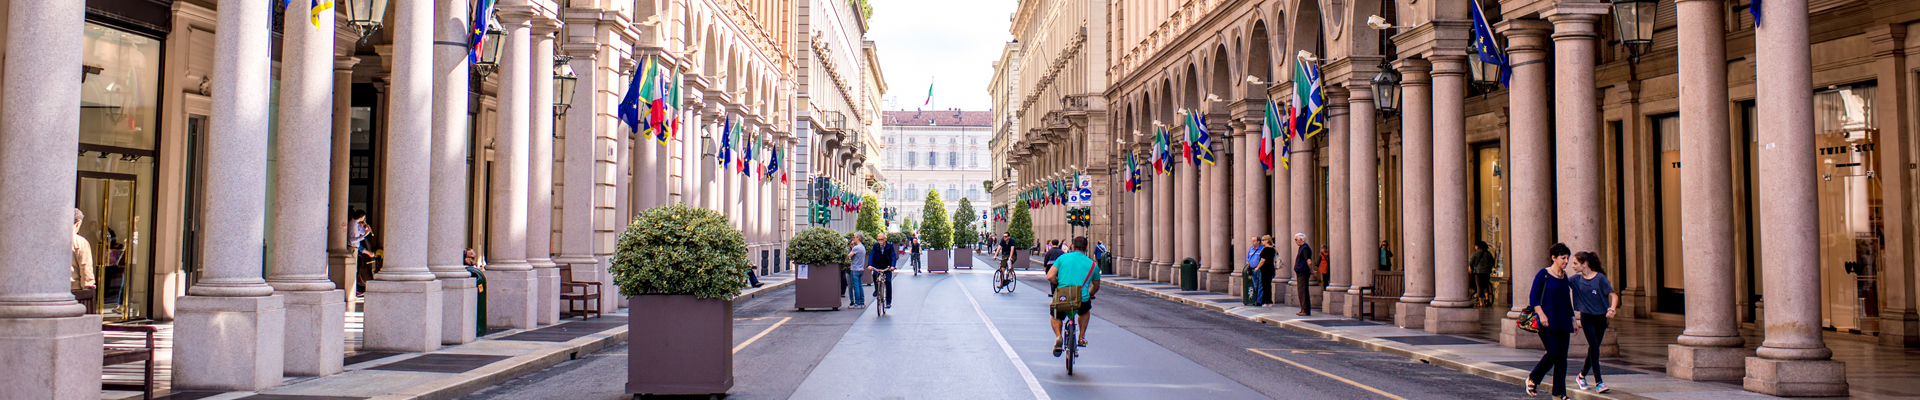 Via Garibaldi in Turin, Italy